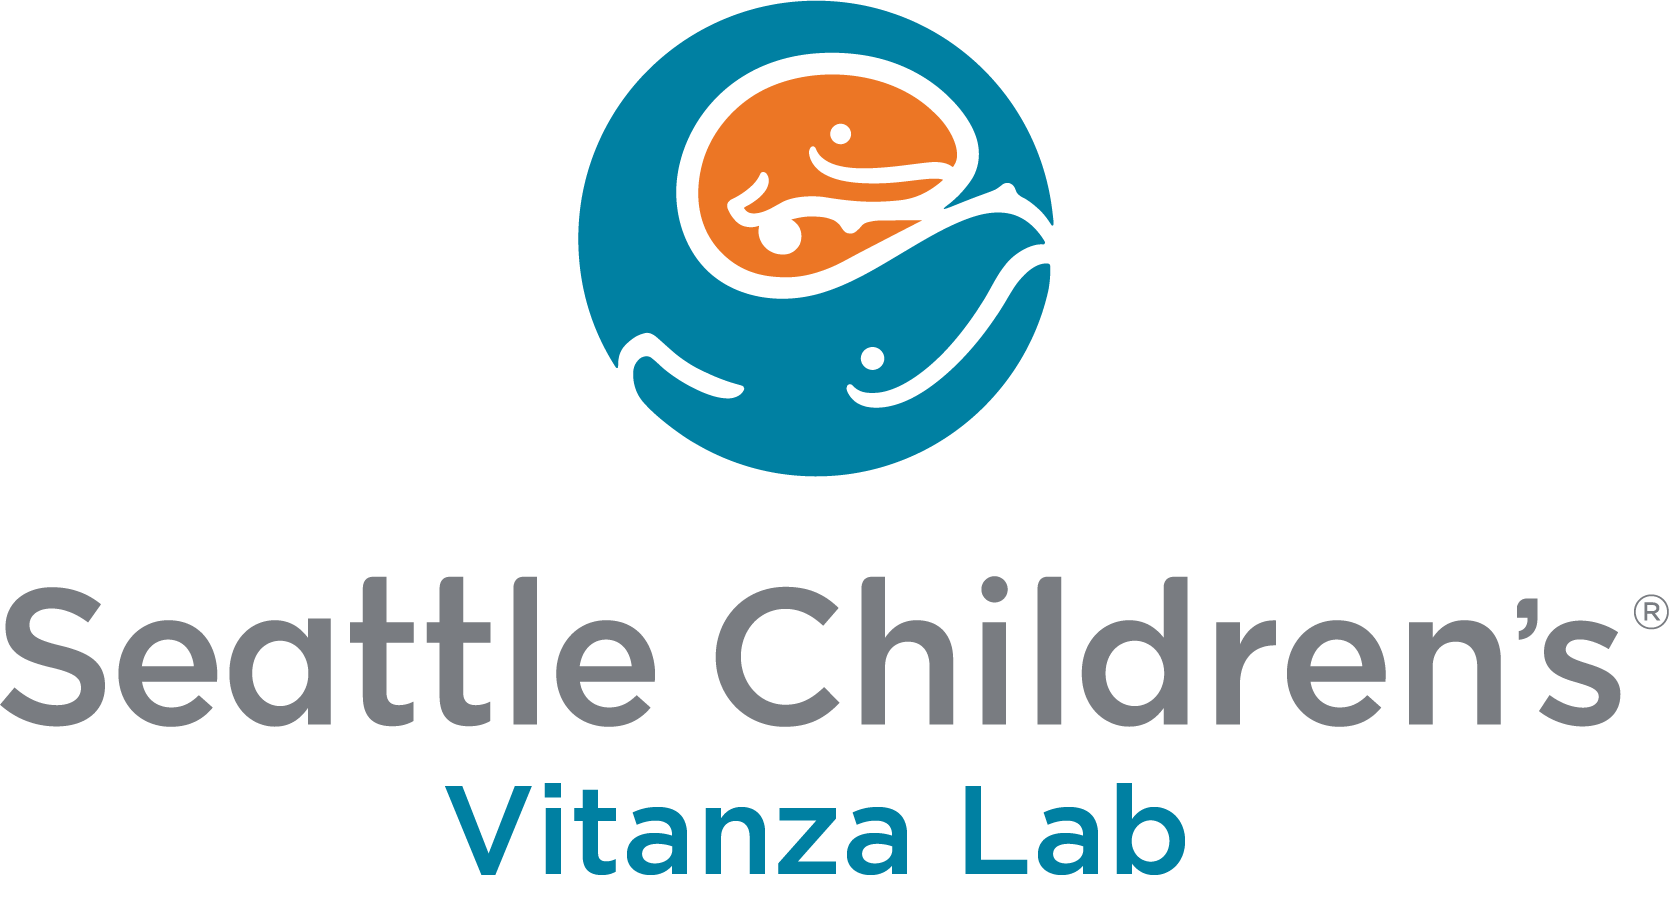 Vitanza Lab logo